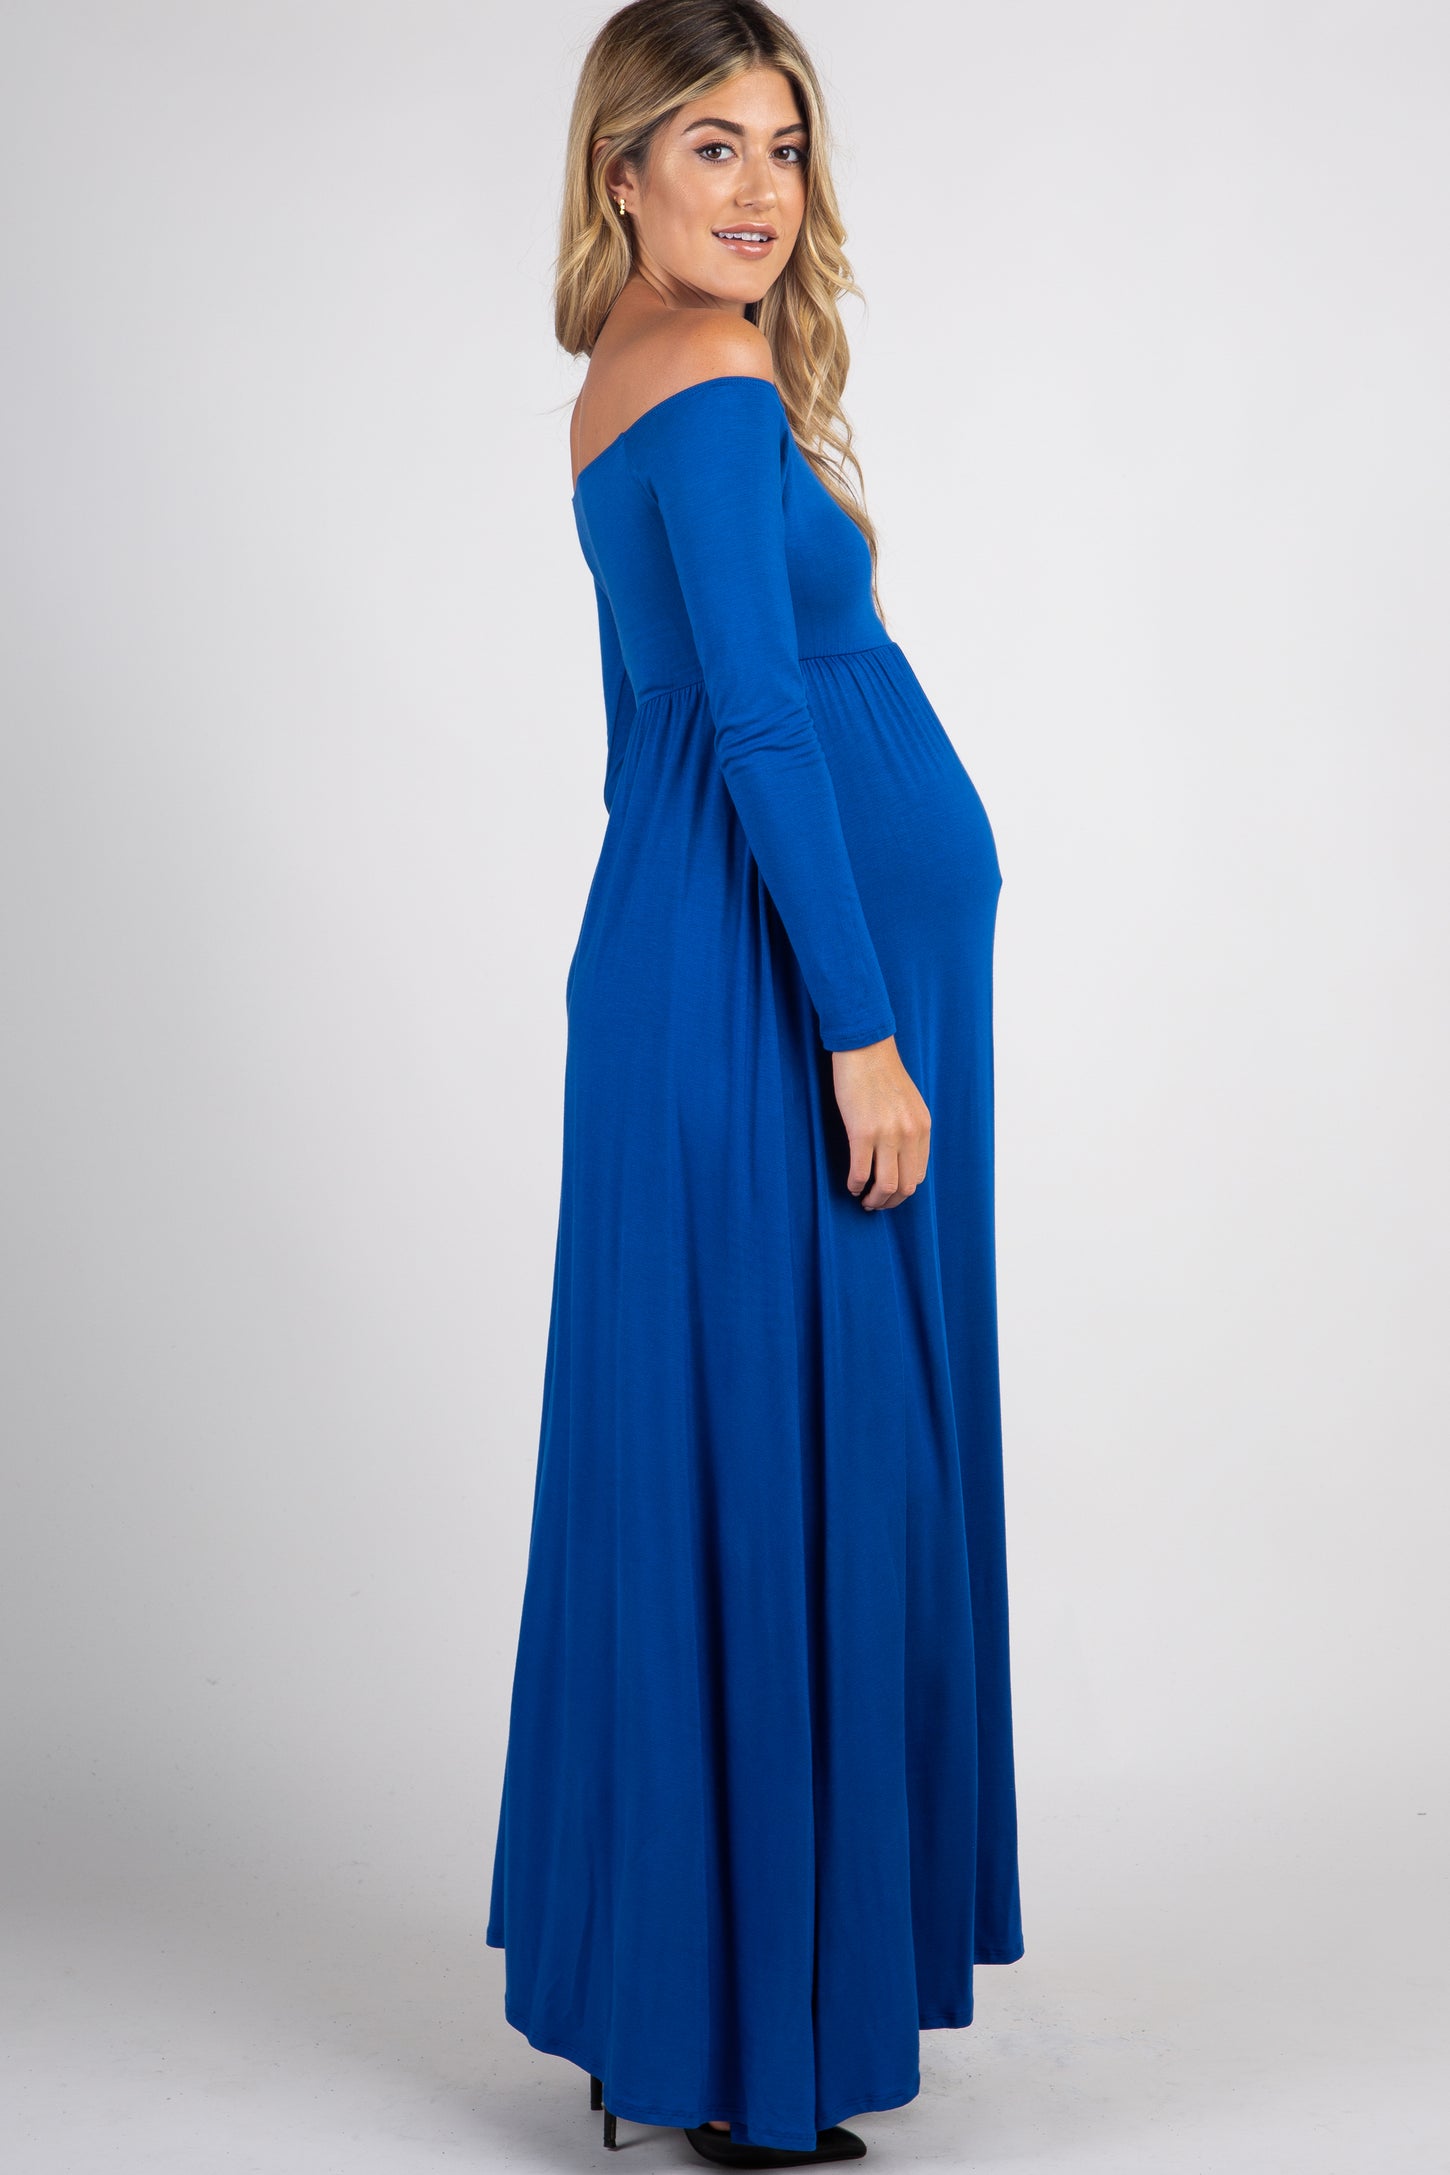 Petite Royal Blue Solid Off Shoulder Maternity Maxi Dress